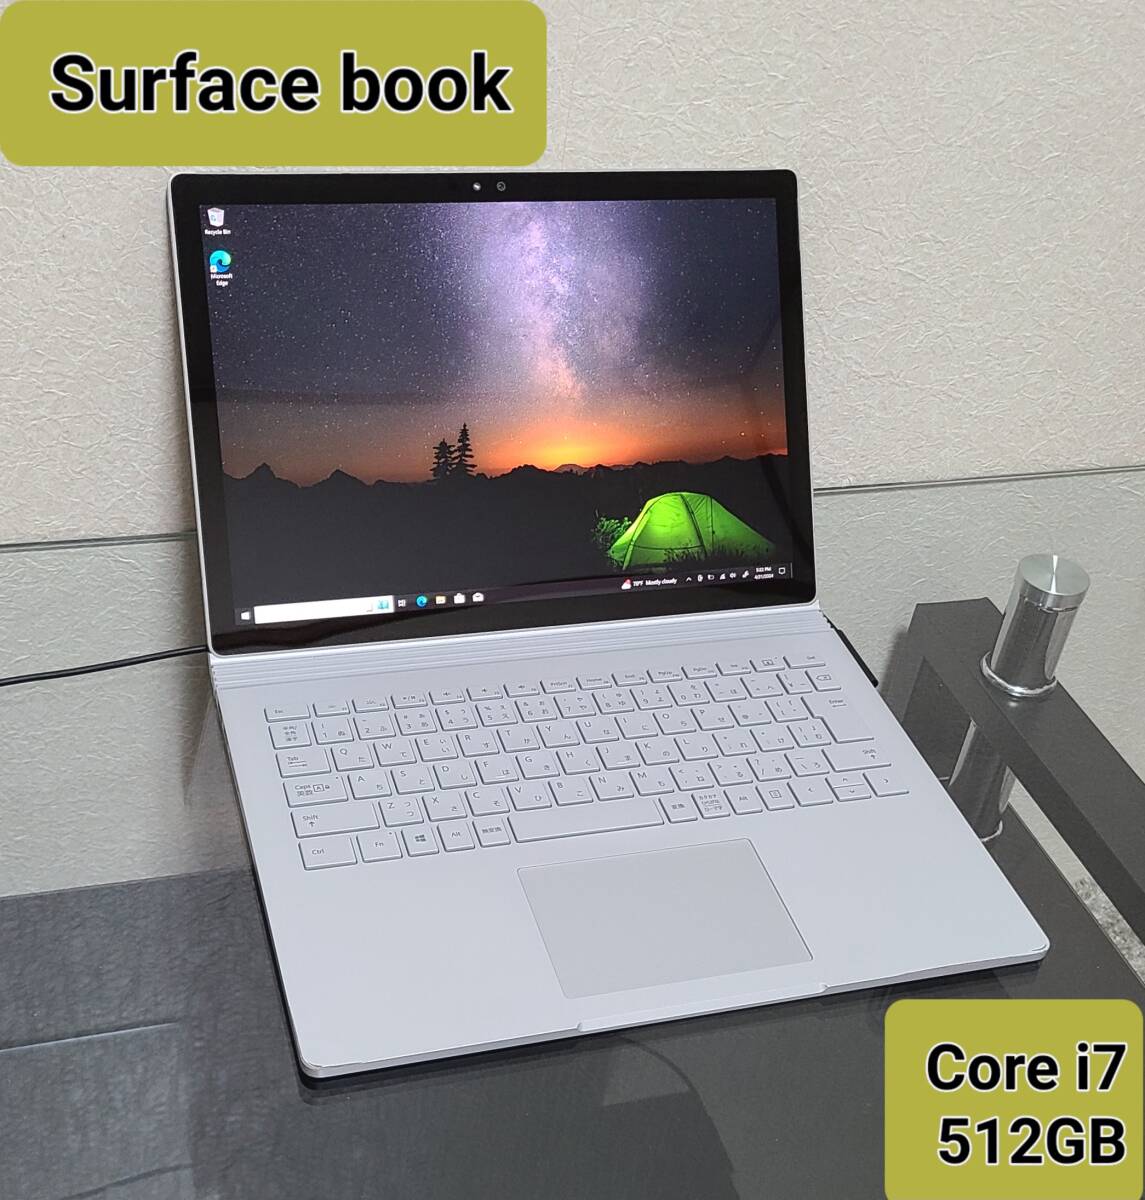 Core i7 512 GB MicroSoft / ノートPC / Surface Book 13.5インチの画像1